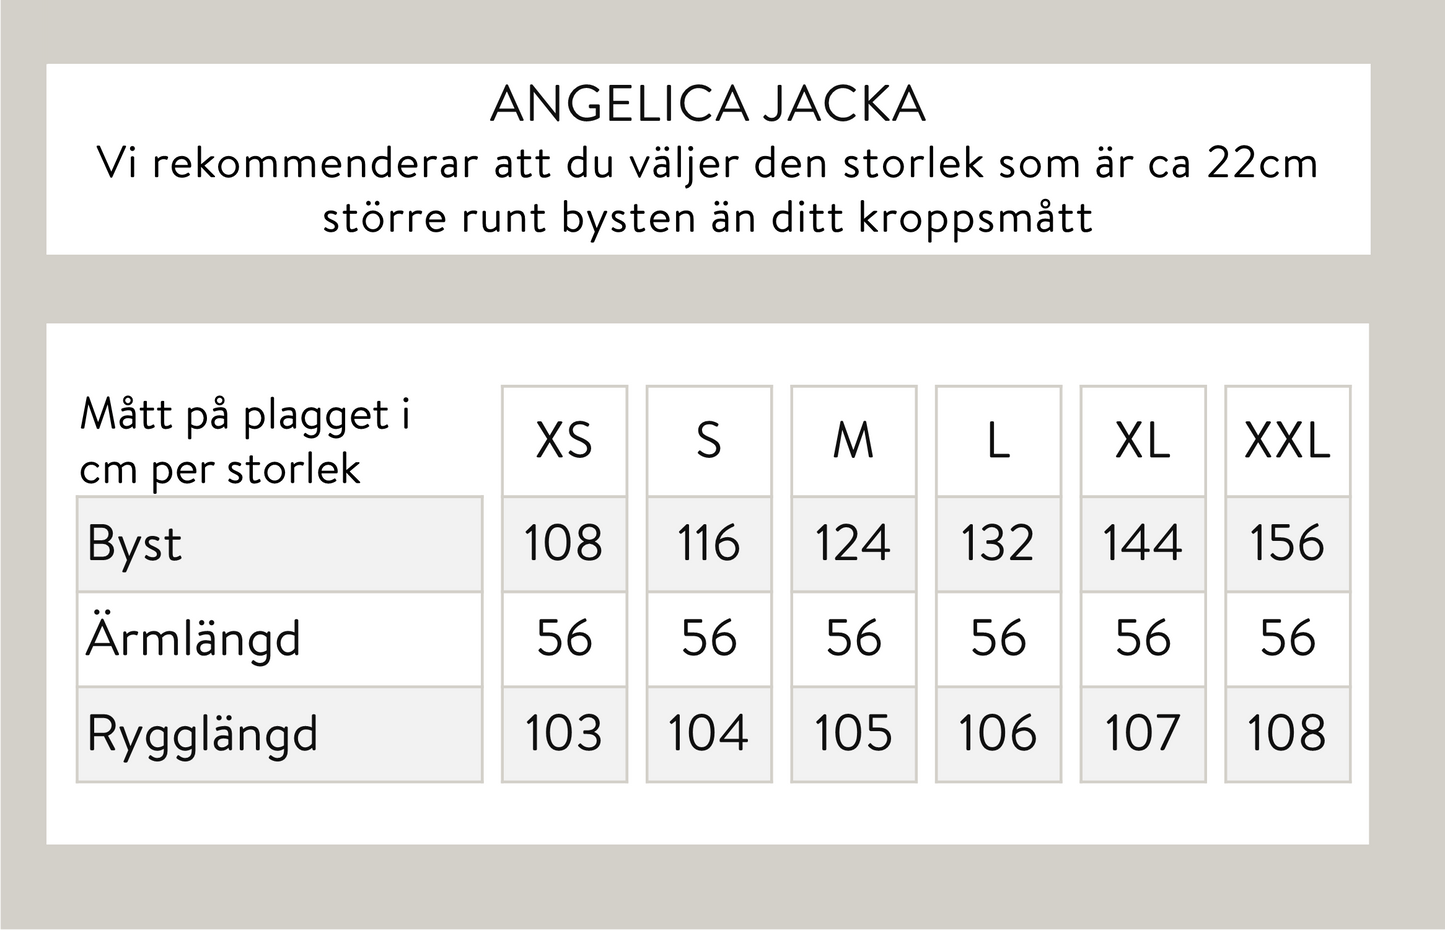 Angelica jacka - Grön